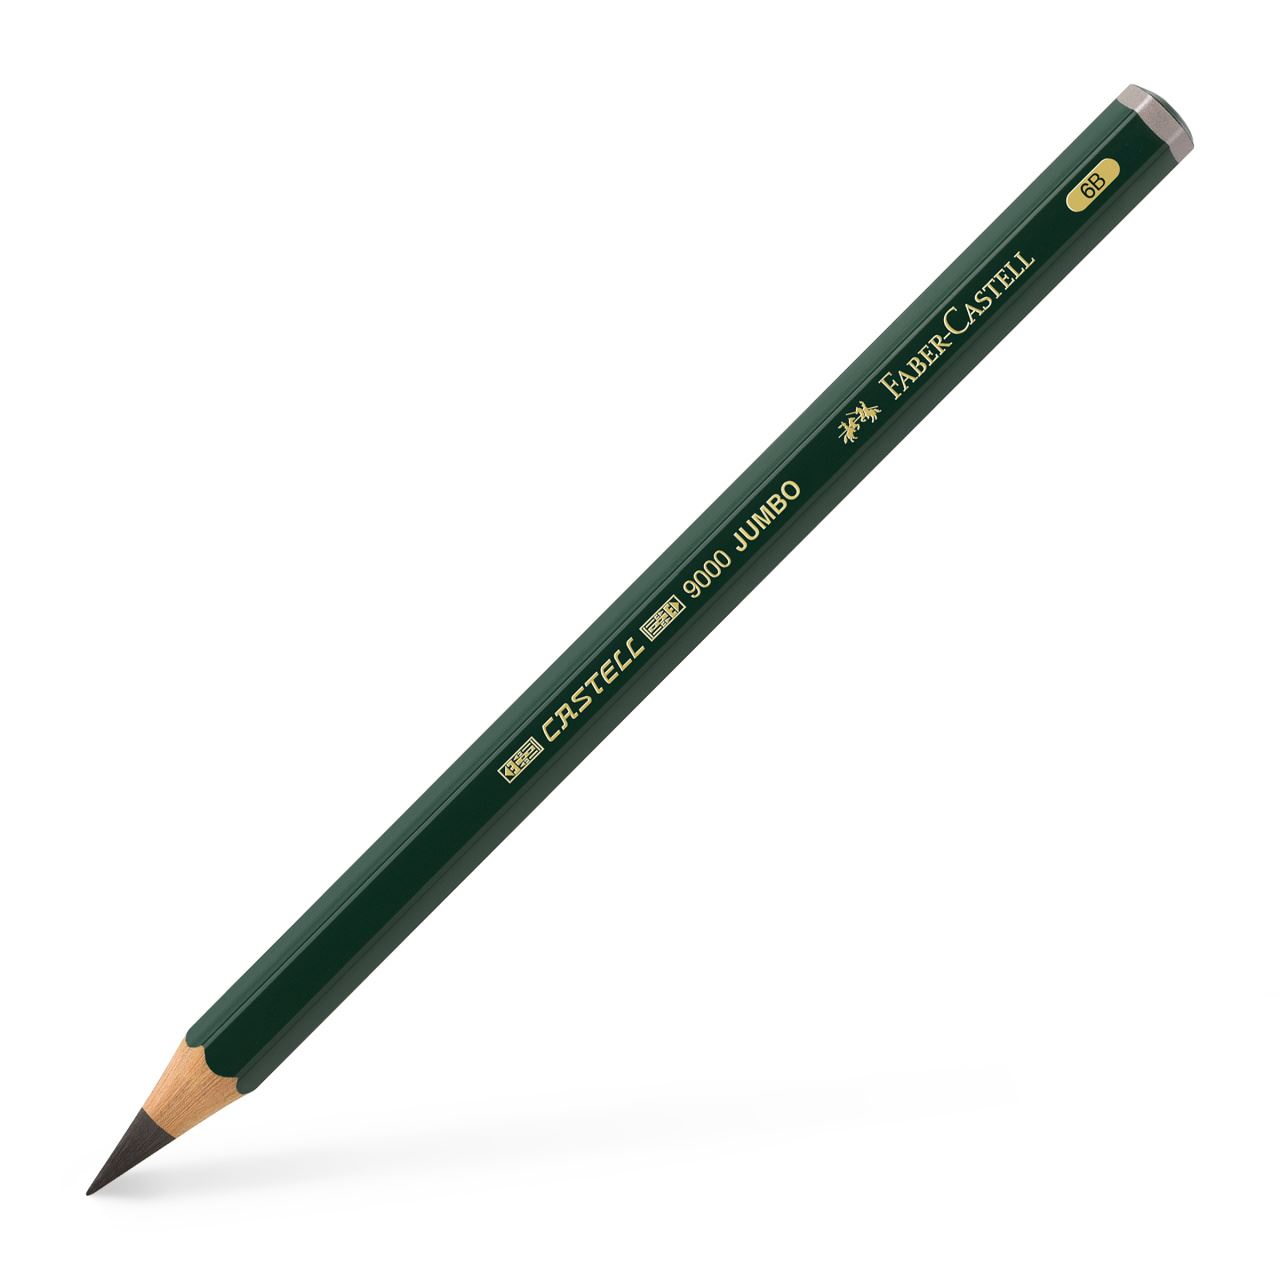 Faber-Castell - Castell 9000 Jumbo graphite pencil, 6B